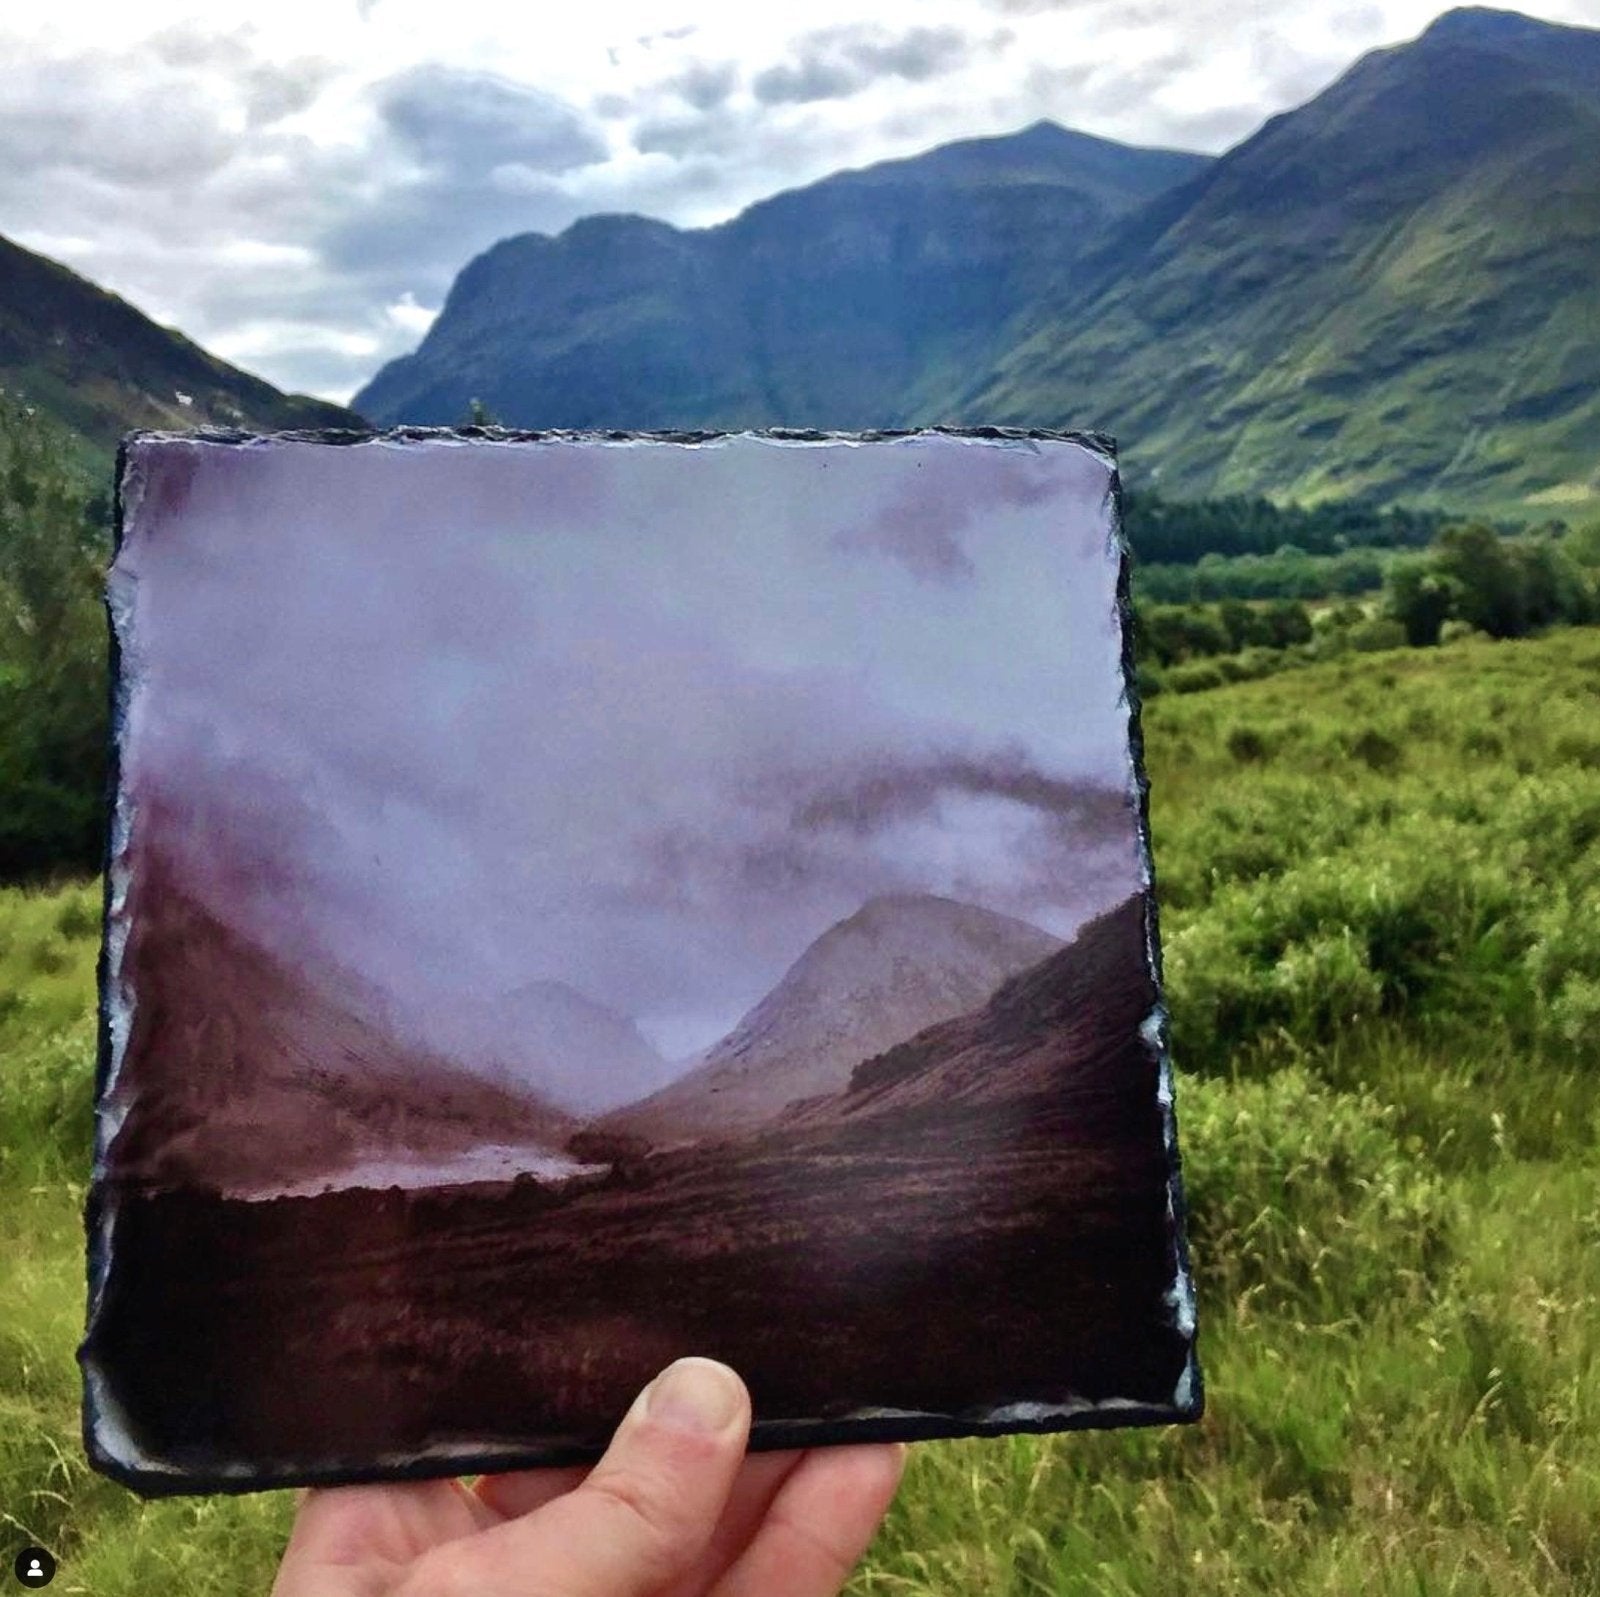 A Moonlit Stag Scottish Slate Art-Slate Art-Scottish Highlands & Lowlands Art Gallery-Paintings, Prints, Homeware, Art Gifts From Scotland By Scottish Artist Kevin Hunter